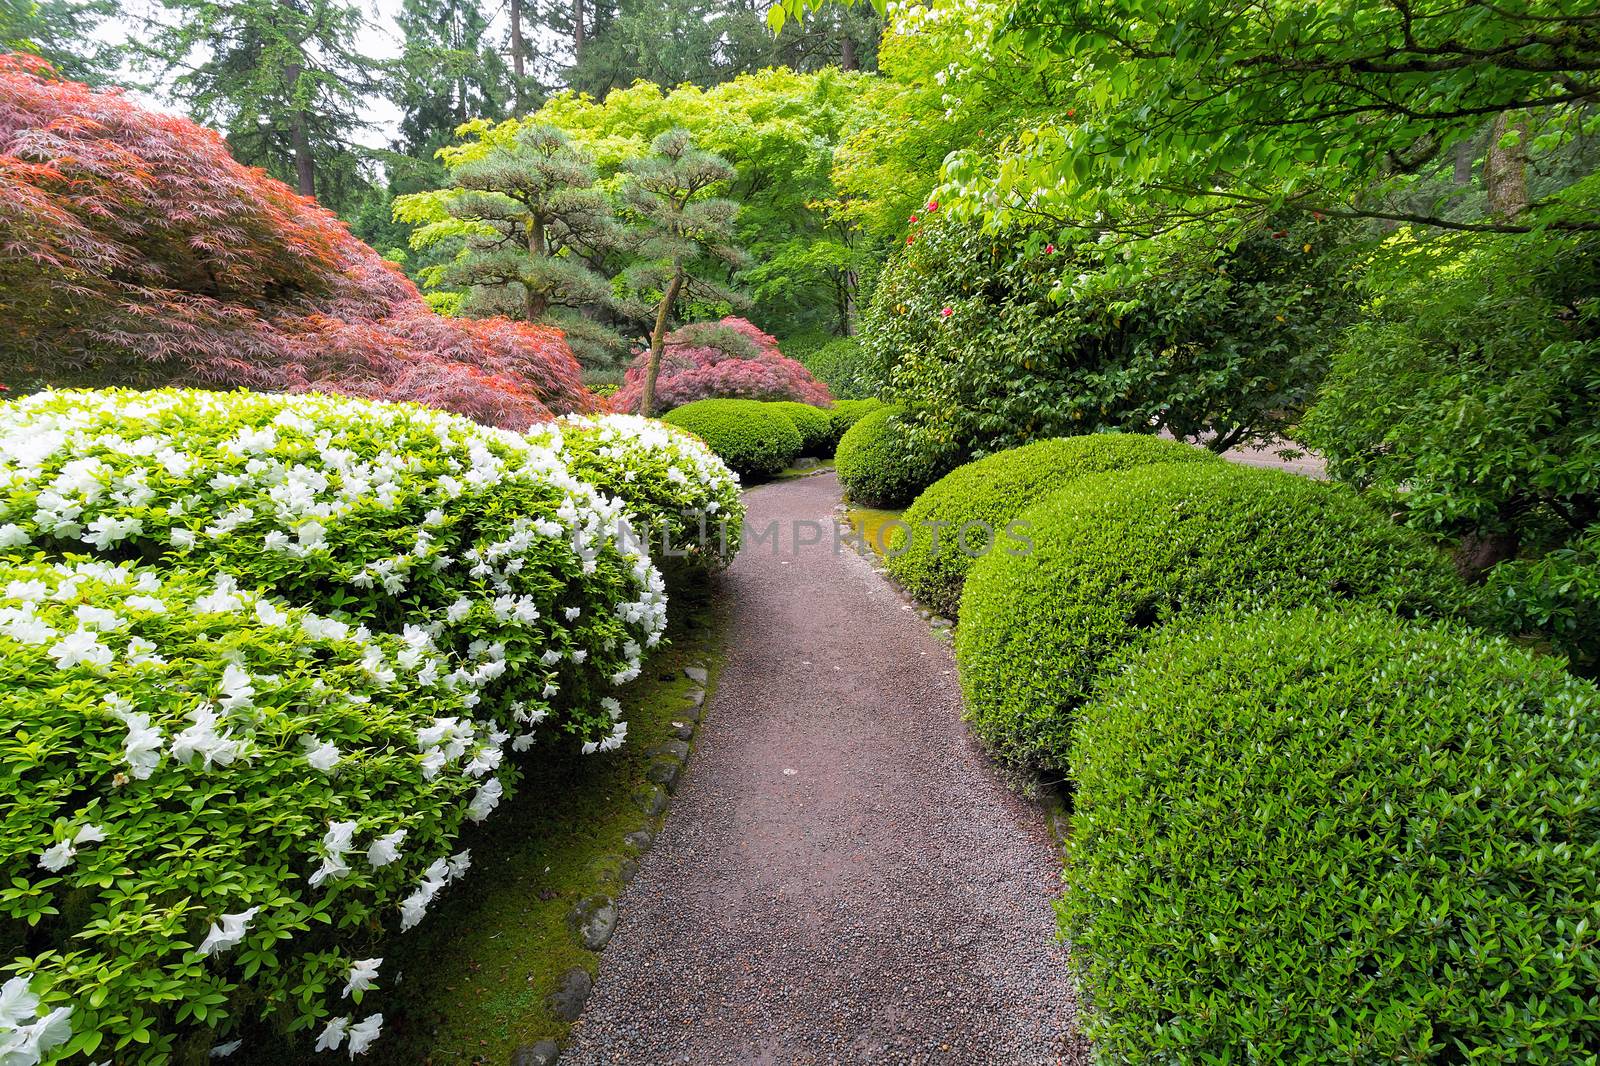 Strolling garden path with trees and shrubs in Japanese Garden suring Spring season